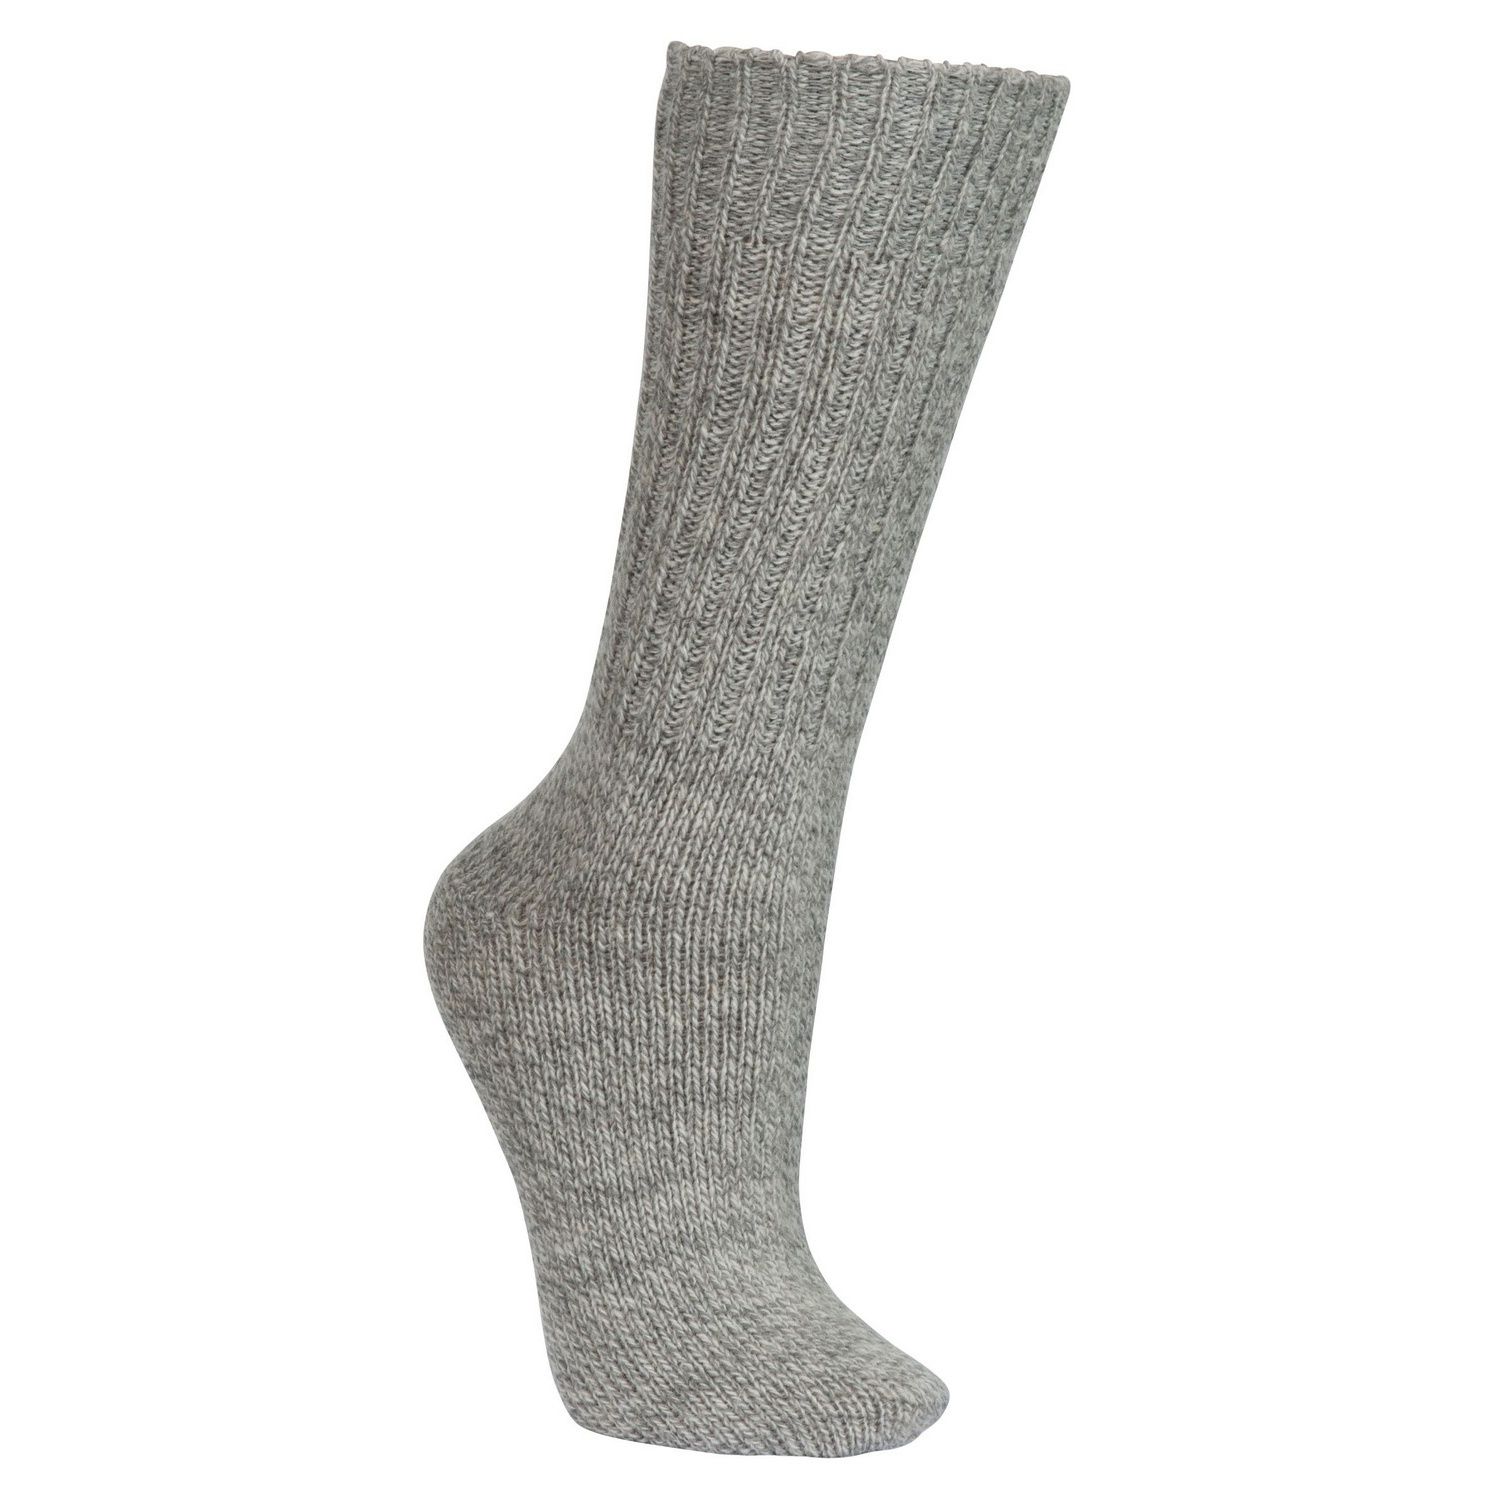 Material: 48% wool, 47% acrylic, 4% polyester, 1% elastane. Chunky knit wool blend sock. Mid-calf. Heavy rib construction.